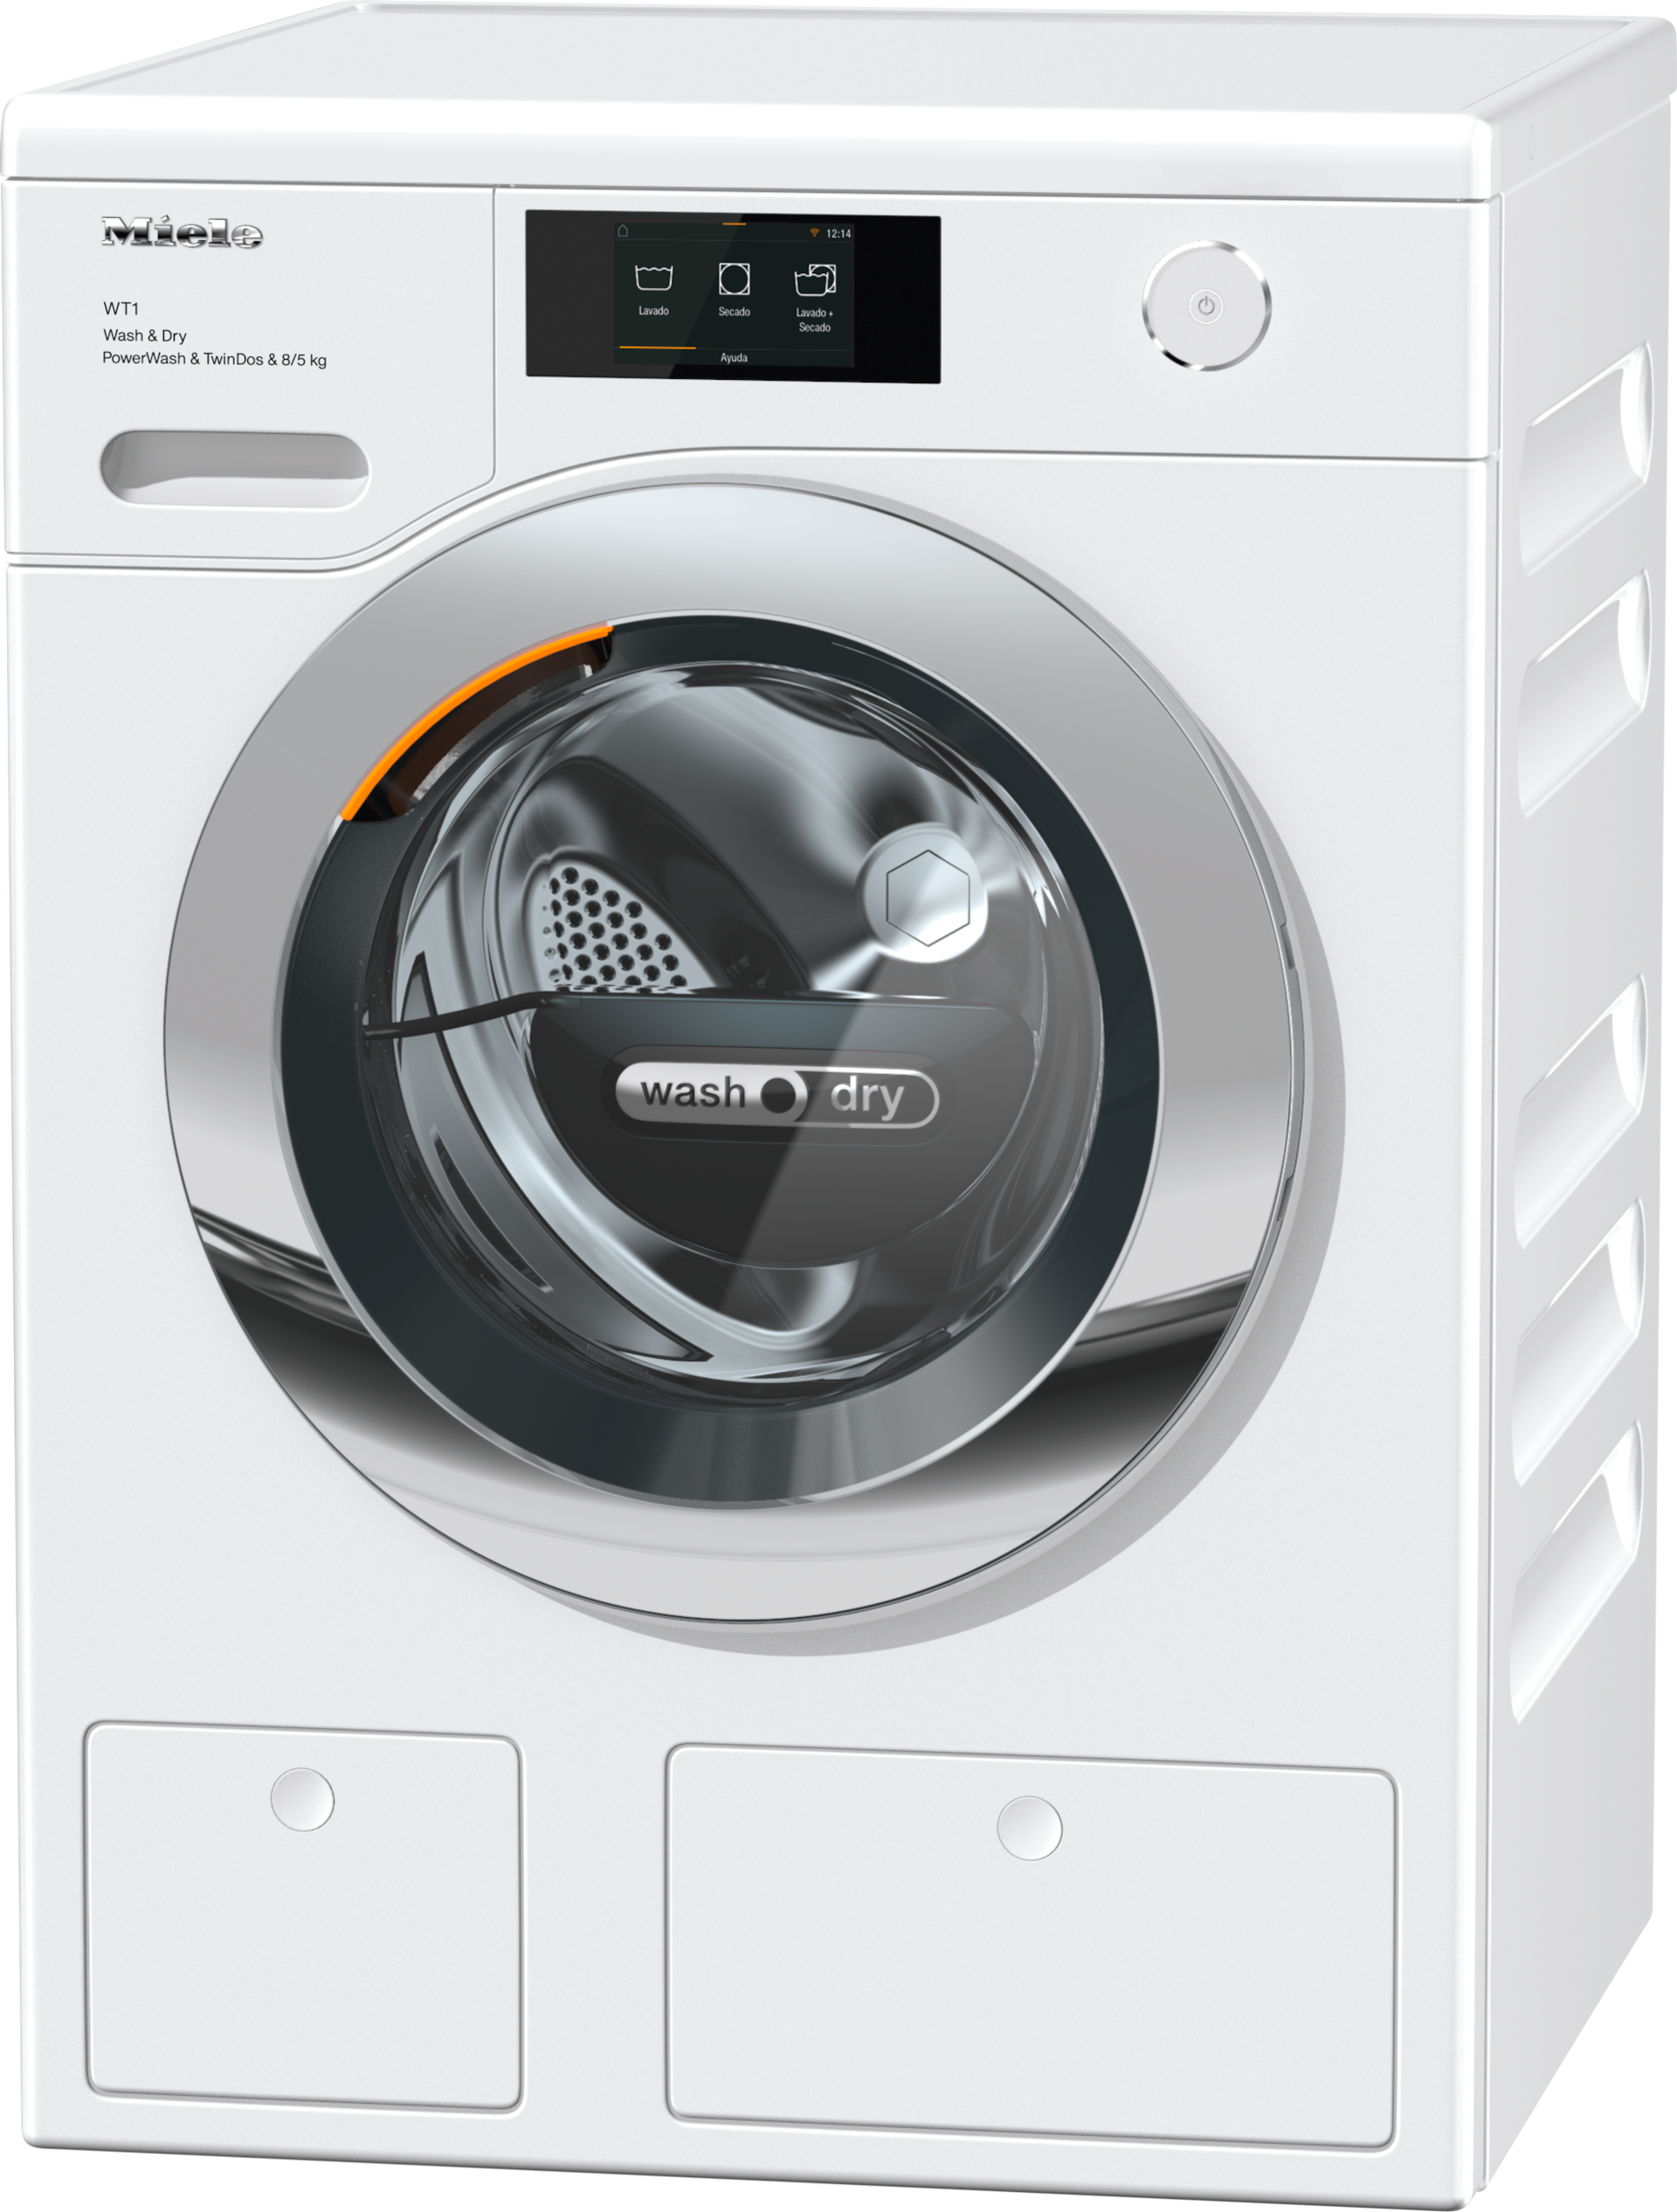 Máquinas de lavar roupa - WTR860WPM PWash&TDos 8/5kg Branco lótus - 1